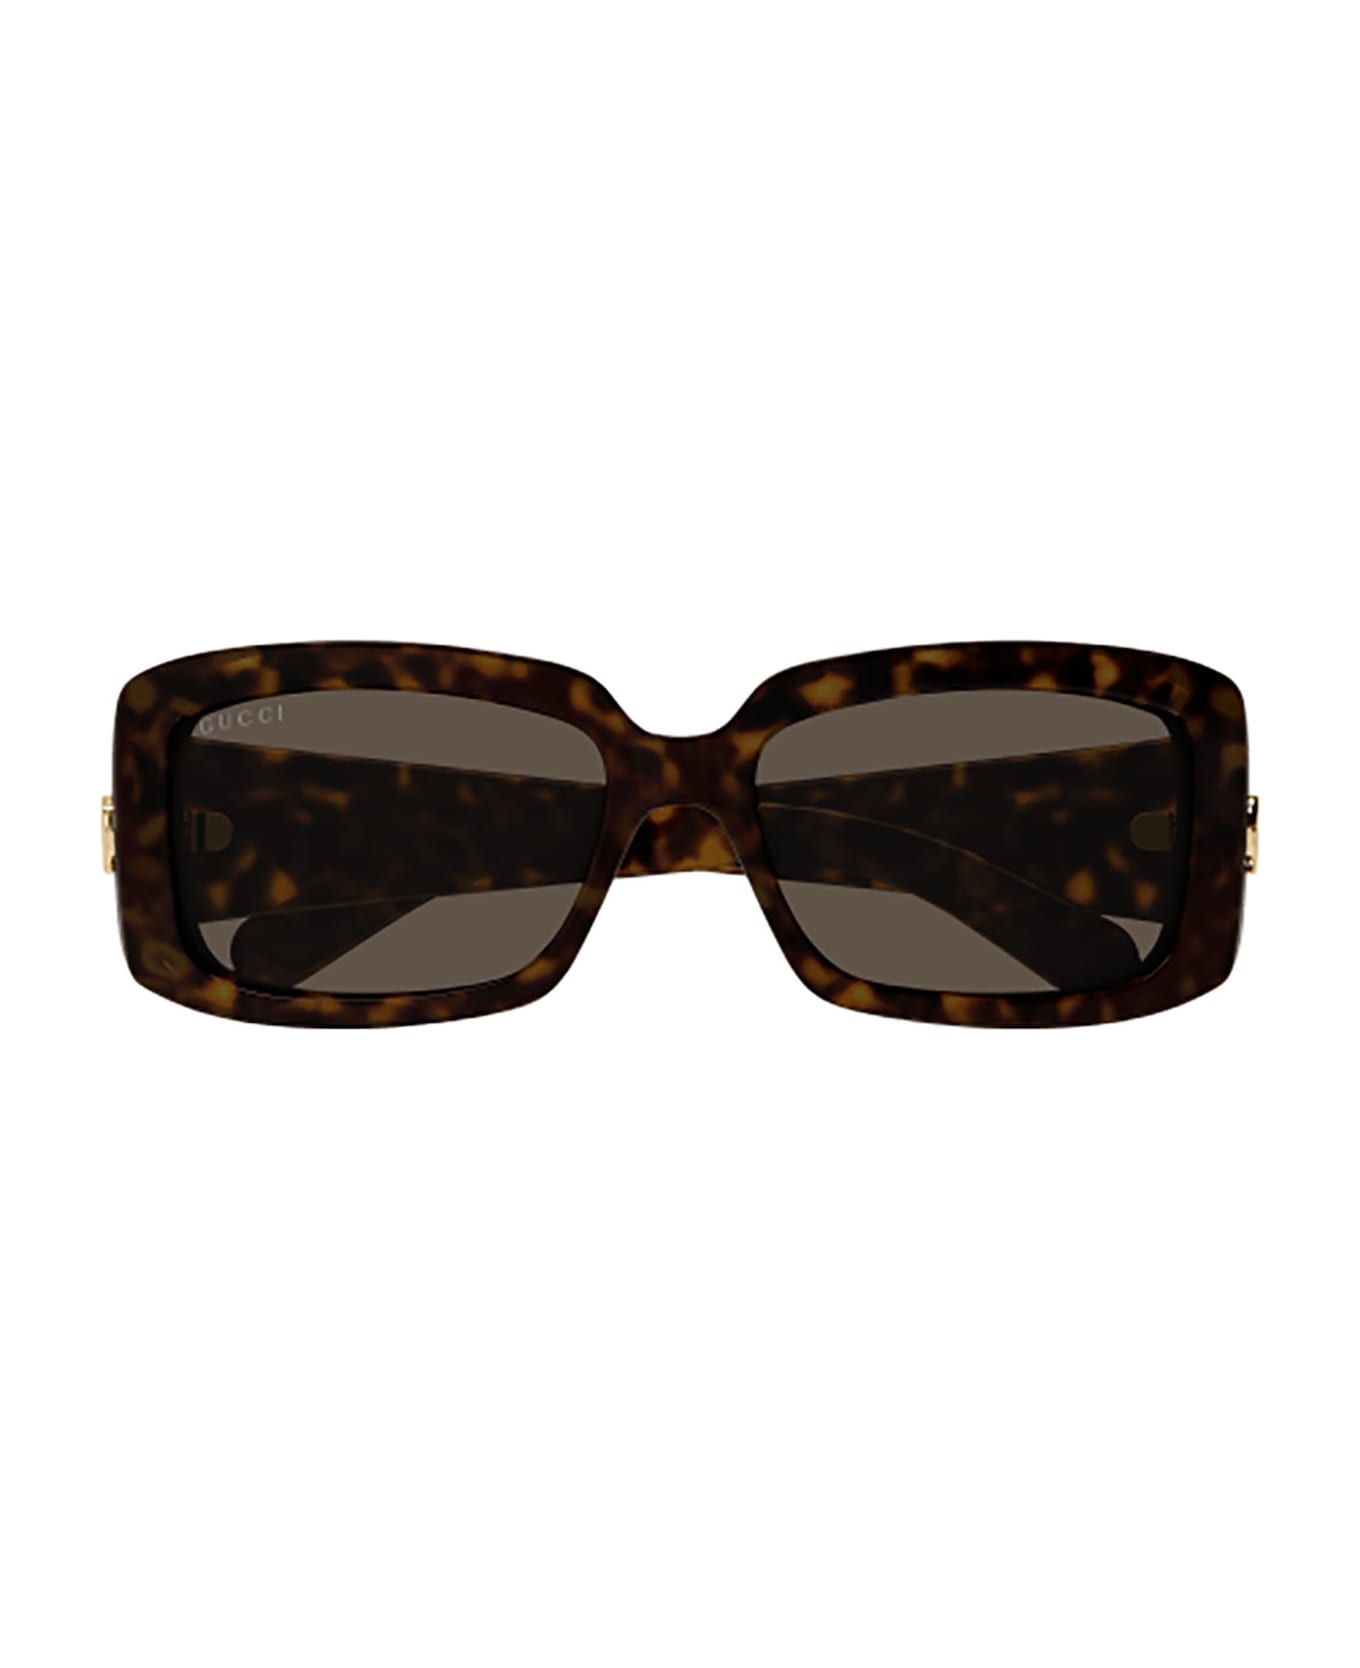 Gucci Eyewear GG1403S Sunglasses - Havana Havana Brown